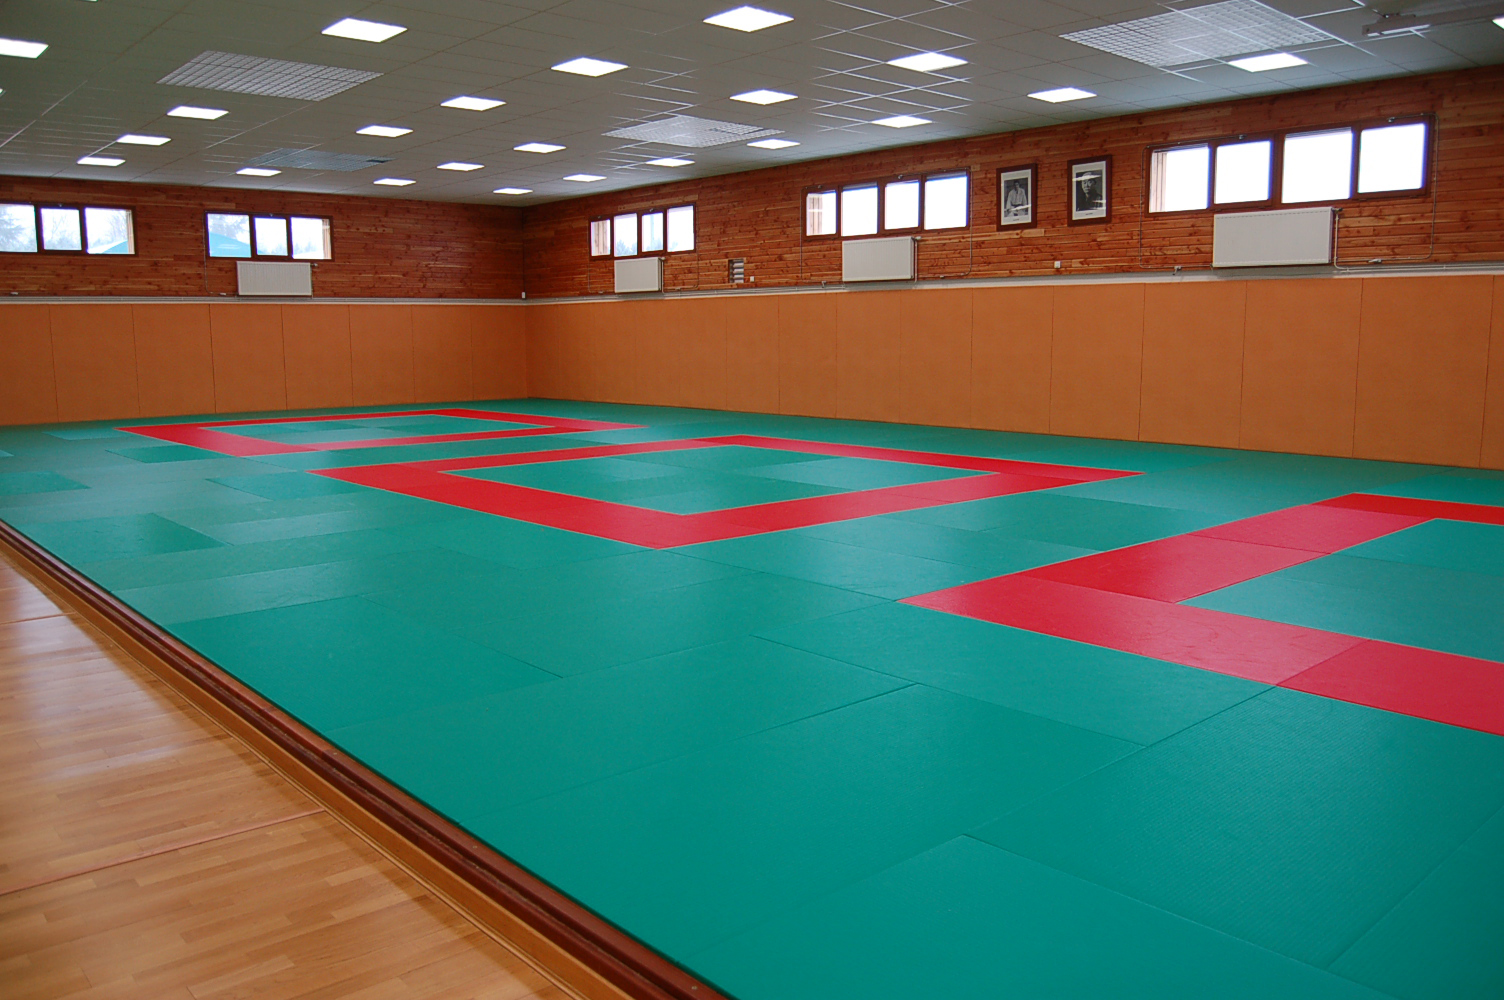 Protection murale pour dojo de judo